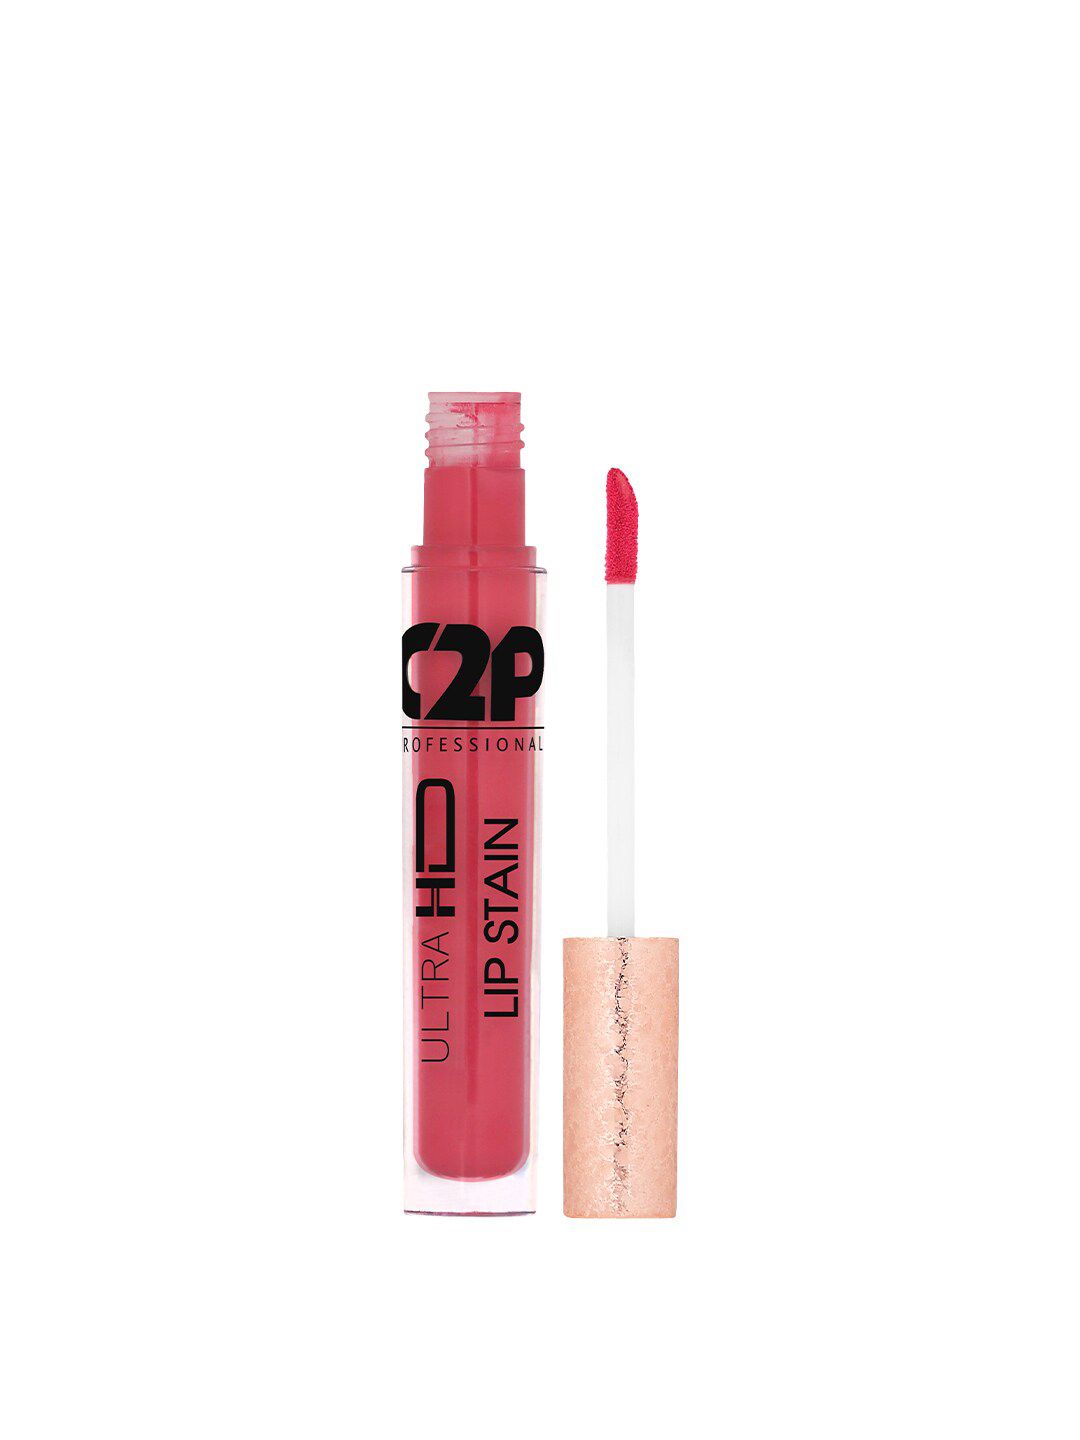 C2P PROFESSIONAL MAKEUP Lip Stain Liquid Lipstick - Pink Toffee 28 5ml Price in India